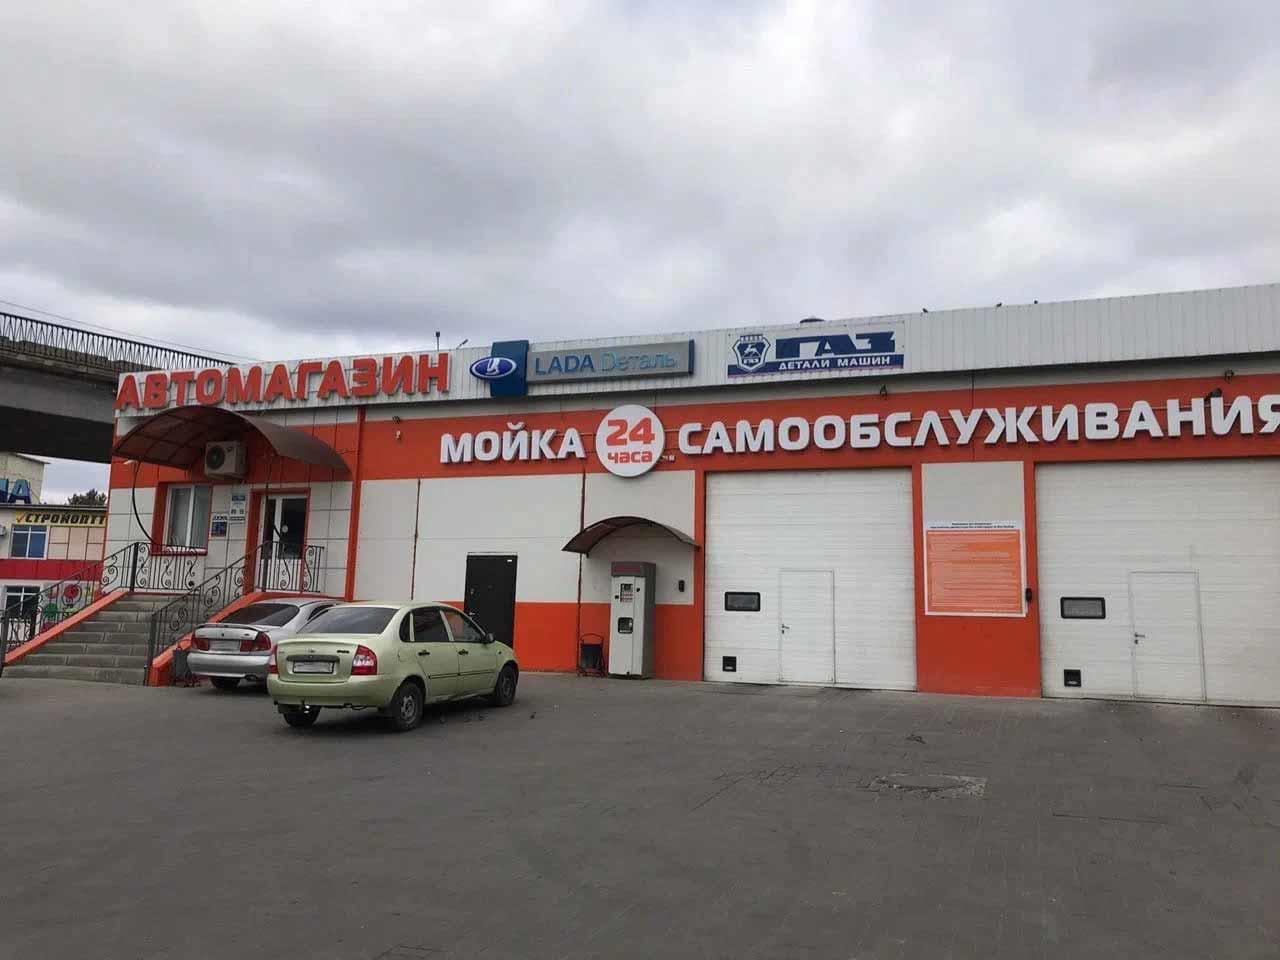 Avtozap36.ru, магазин / интернет-магазин